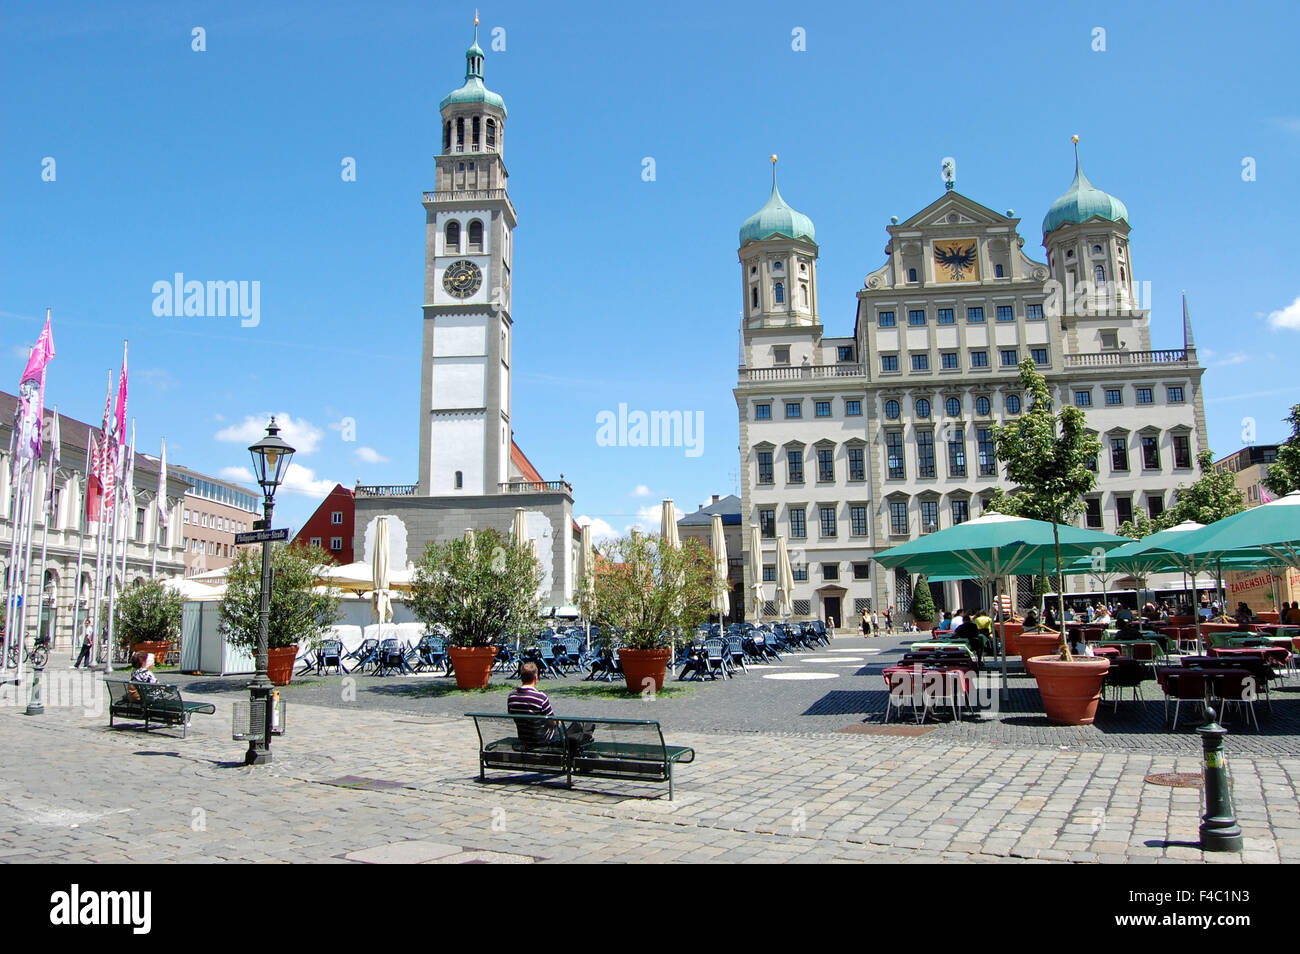 The Perlachturm and Rathaus in Rathausplatz in Augsburg, Germany. Stock Photo